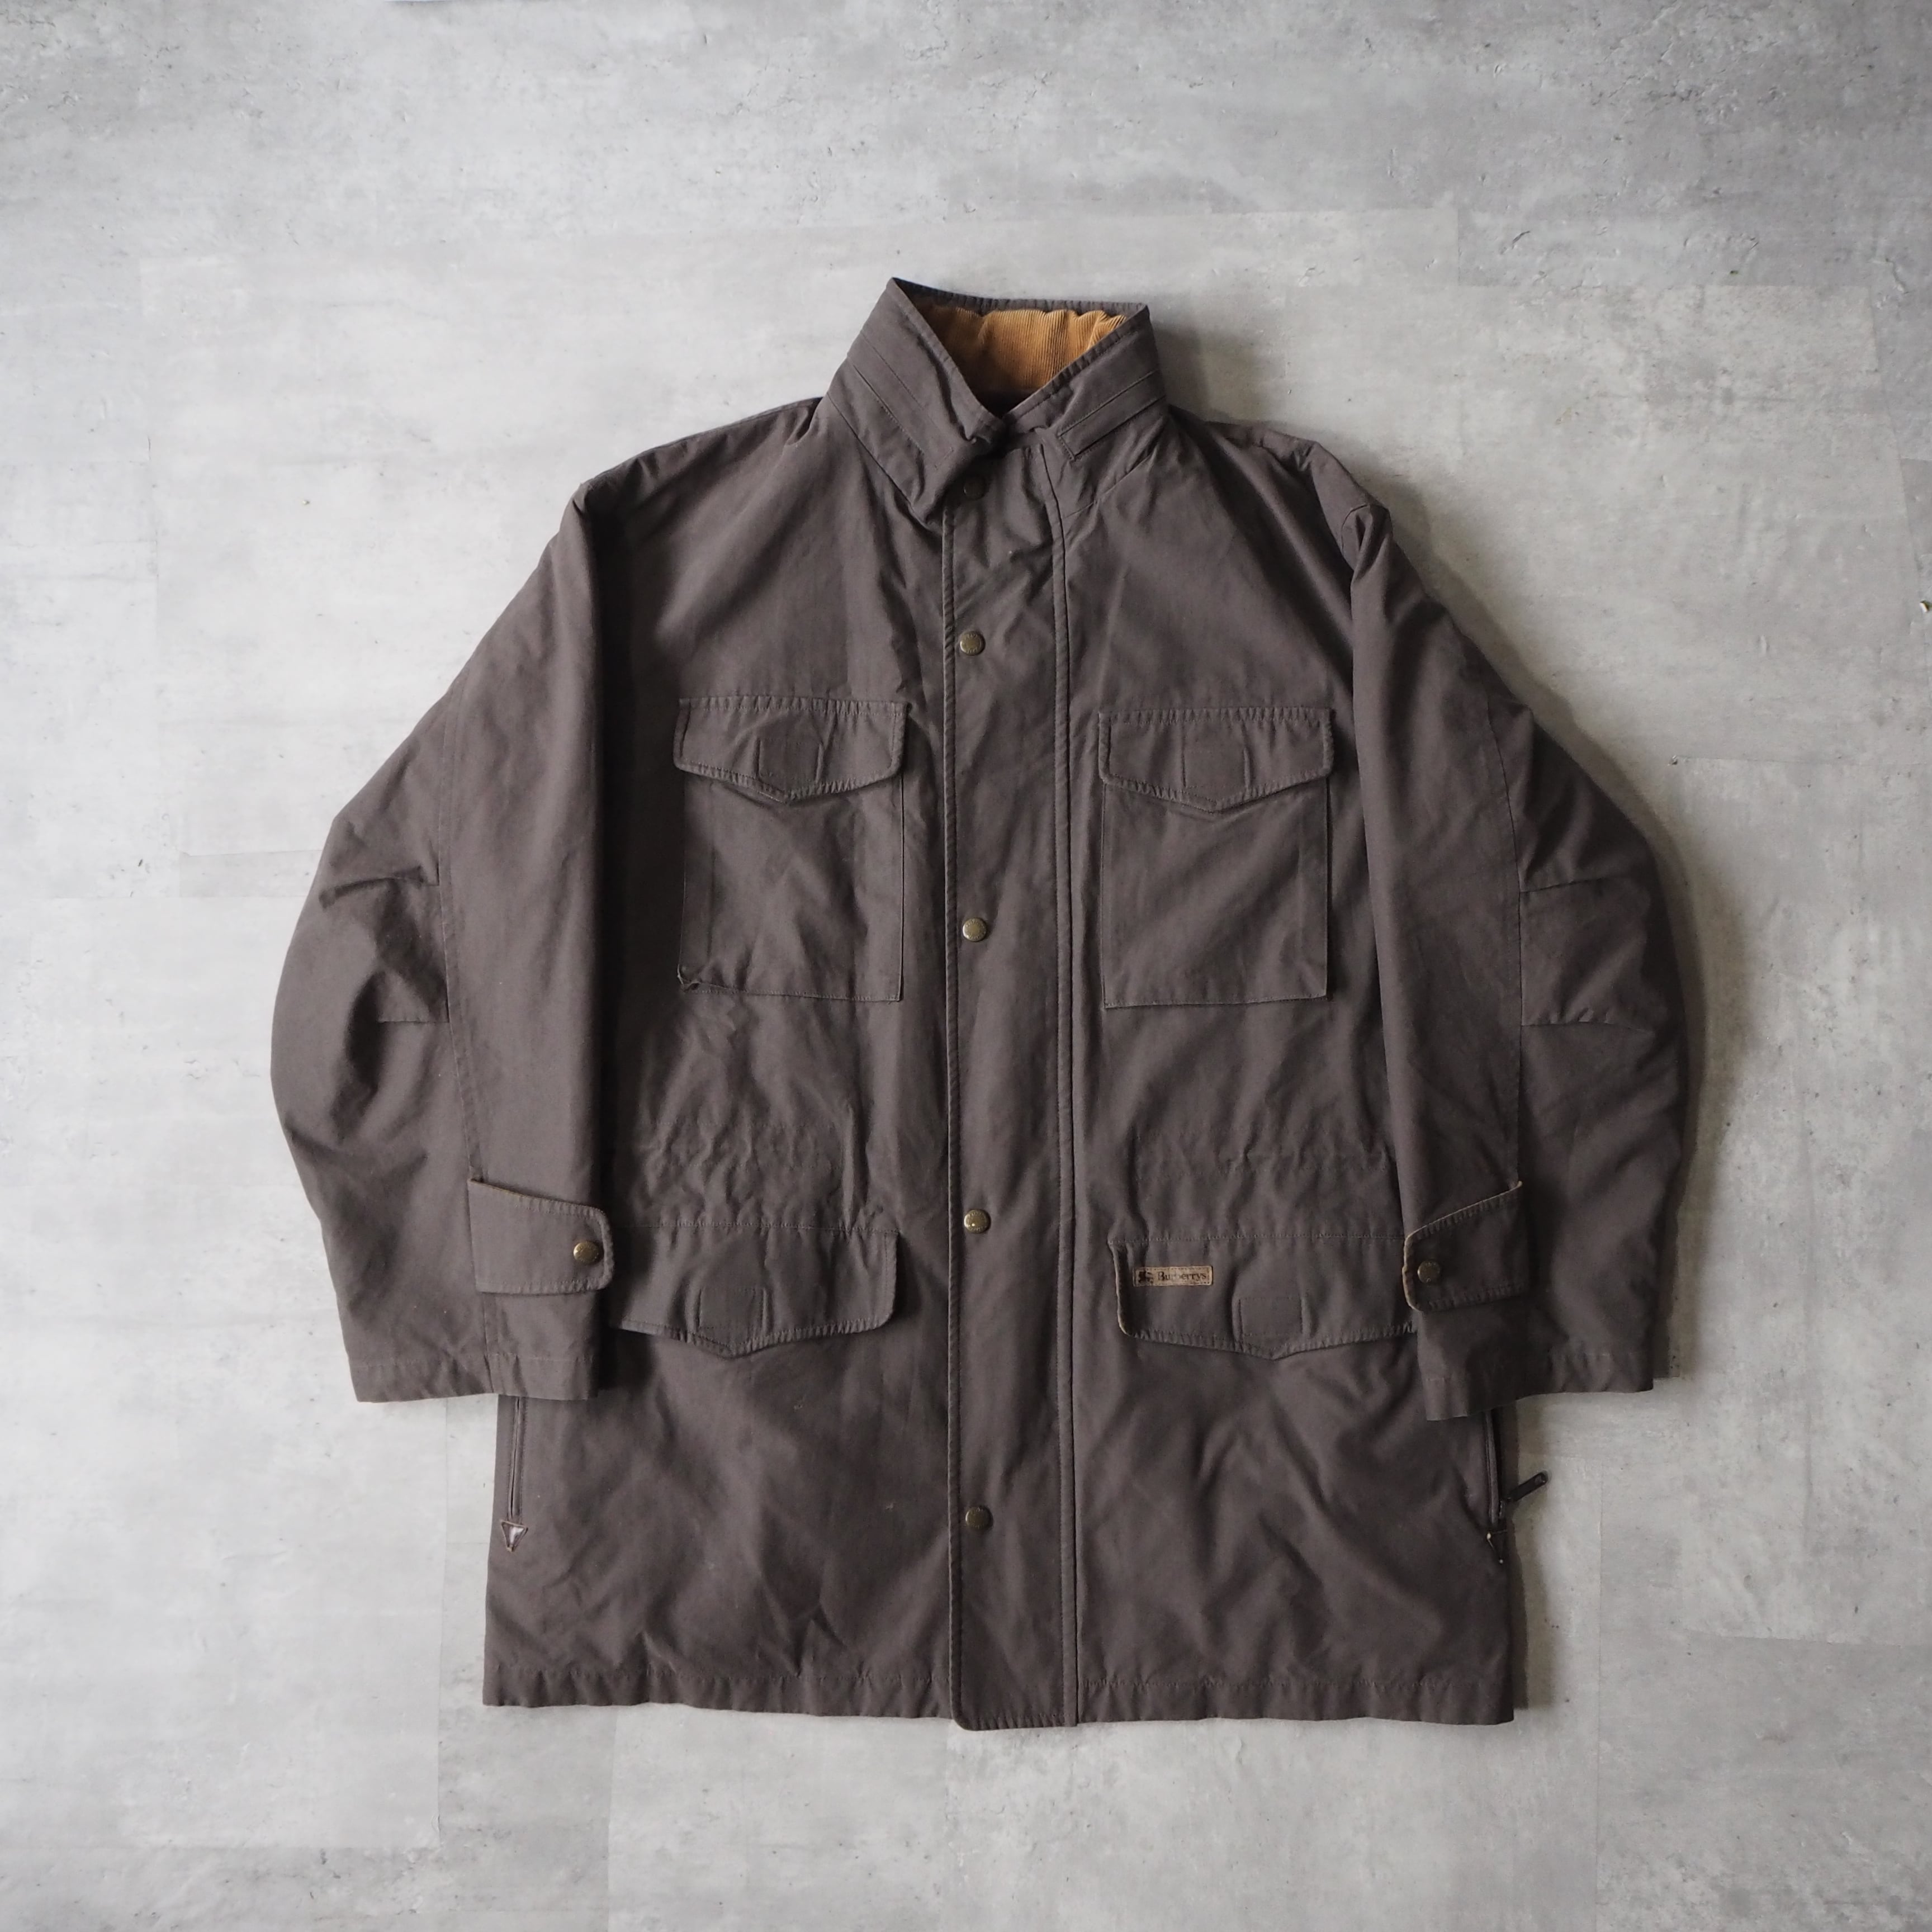 90s “Burberrys” M-65 type military taste jacket 90年代 バーバリー